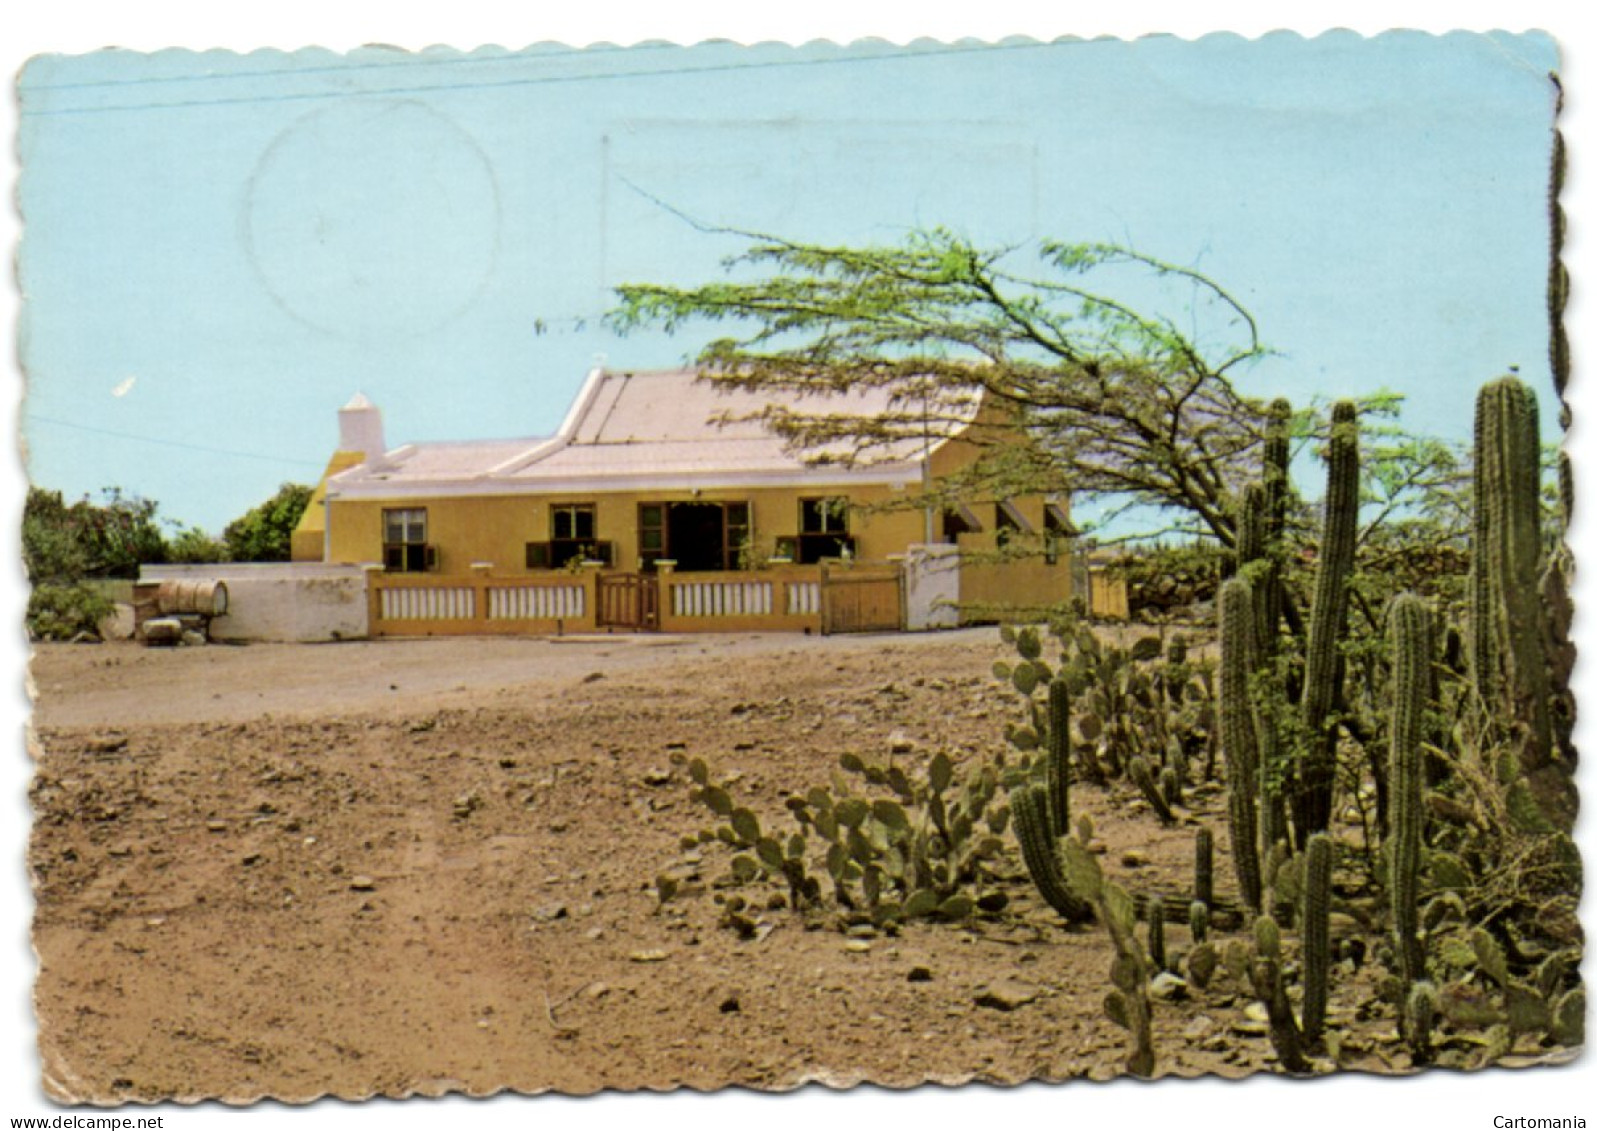 Aruba - Neth. Antilles - Typical Aruban Cunucuhouse With Divi Divi Tree And Cactus - Aruba